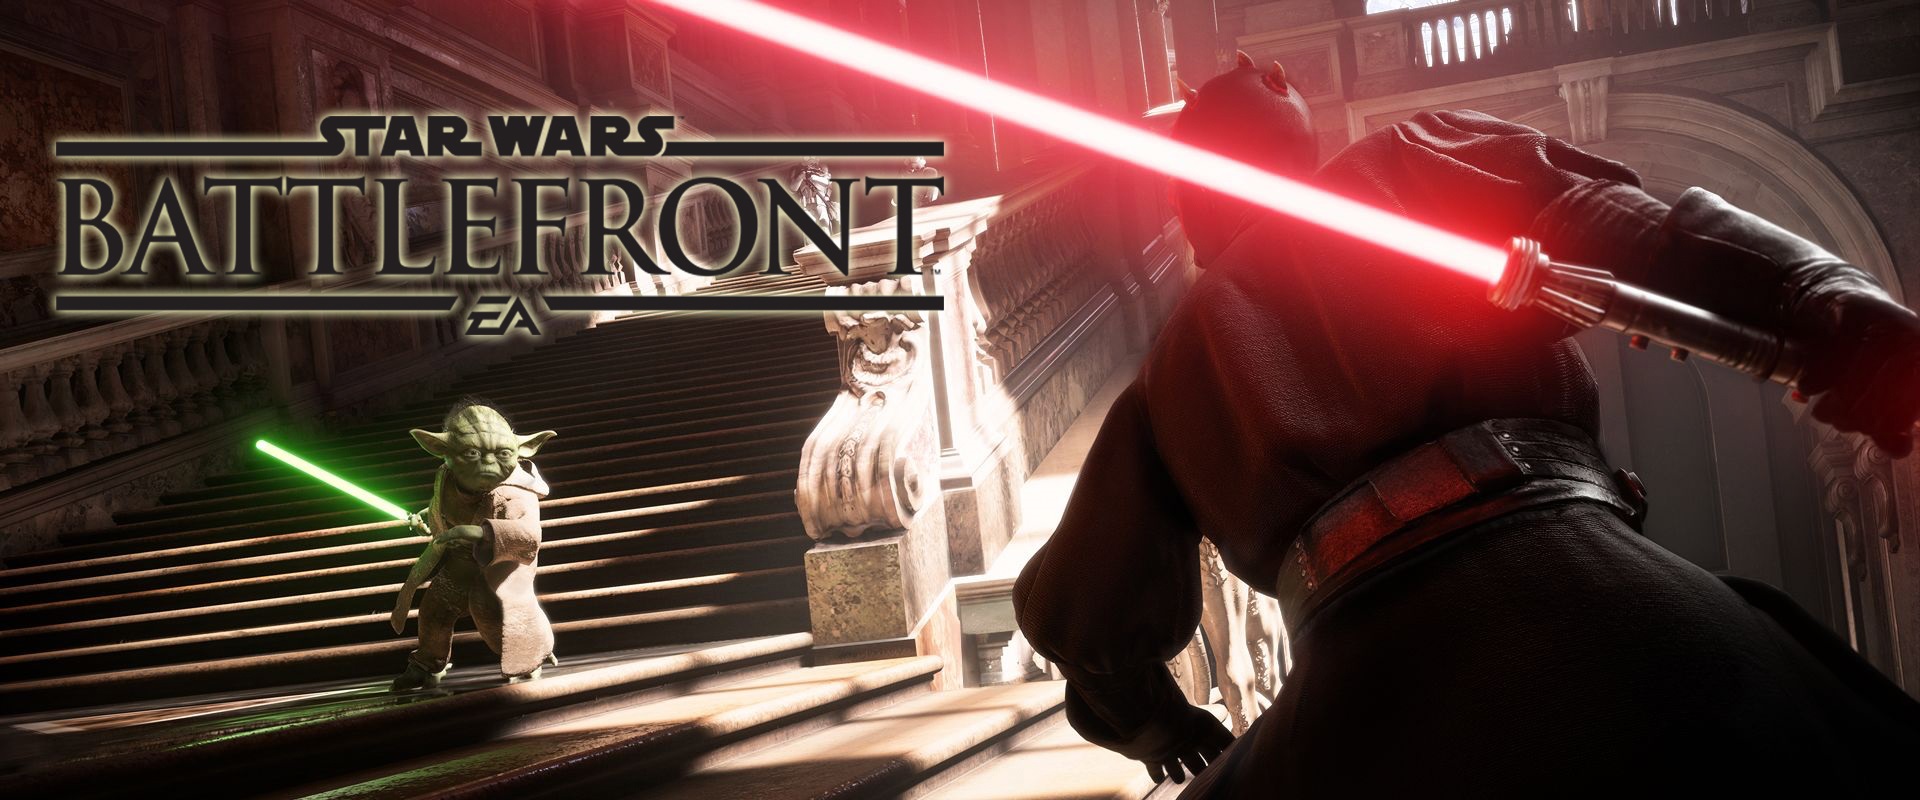 Star Wars Battlefront 2 features